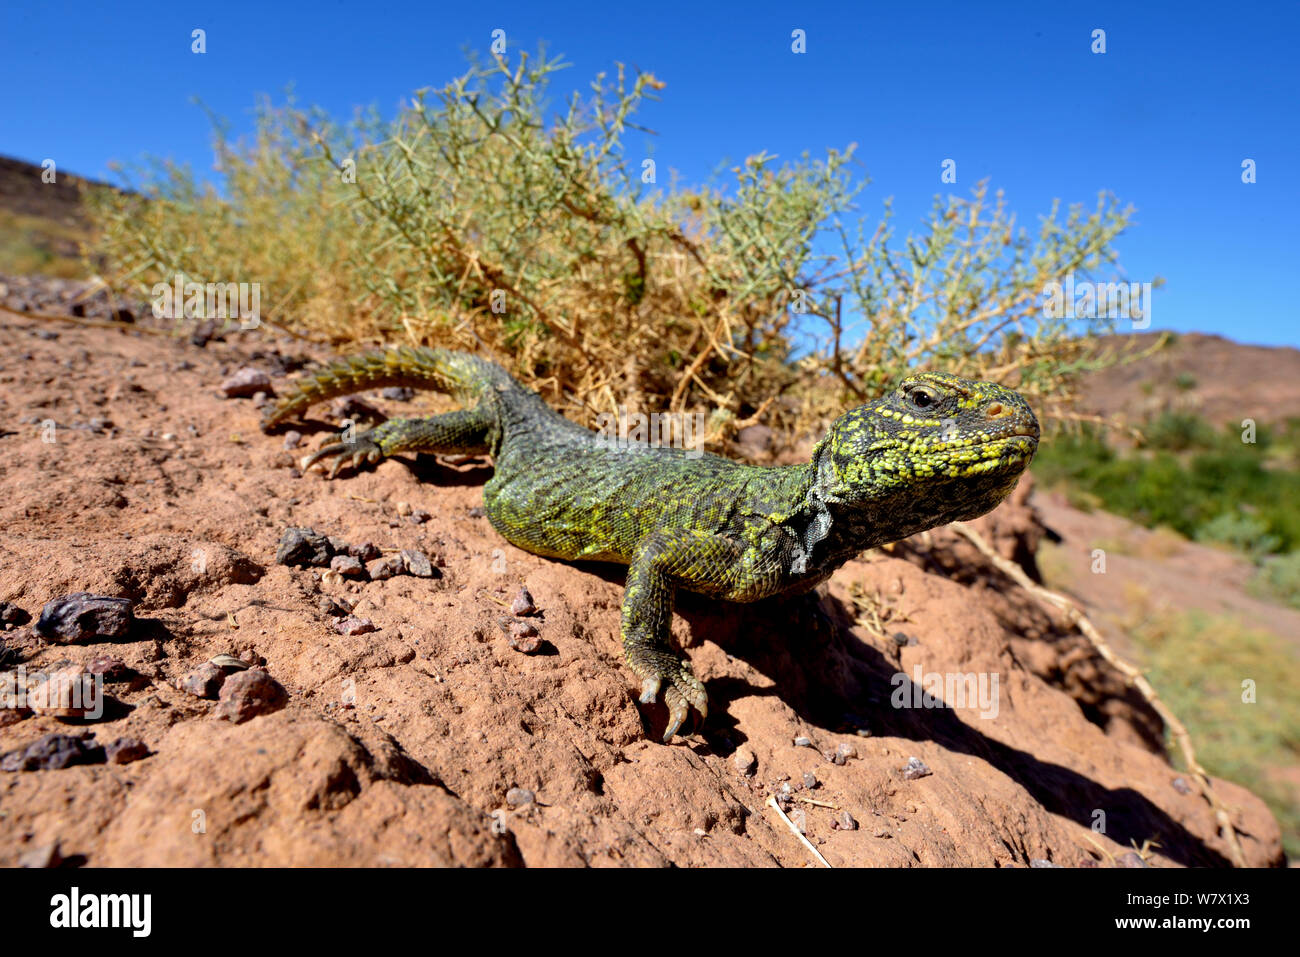 Spiny-tailed lizard (Uromastyx nigriventris) on rocks, near Ouarzazate, Morocco. Stock Photo